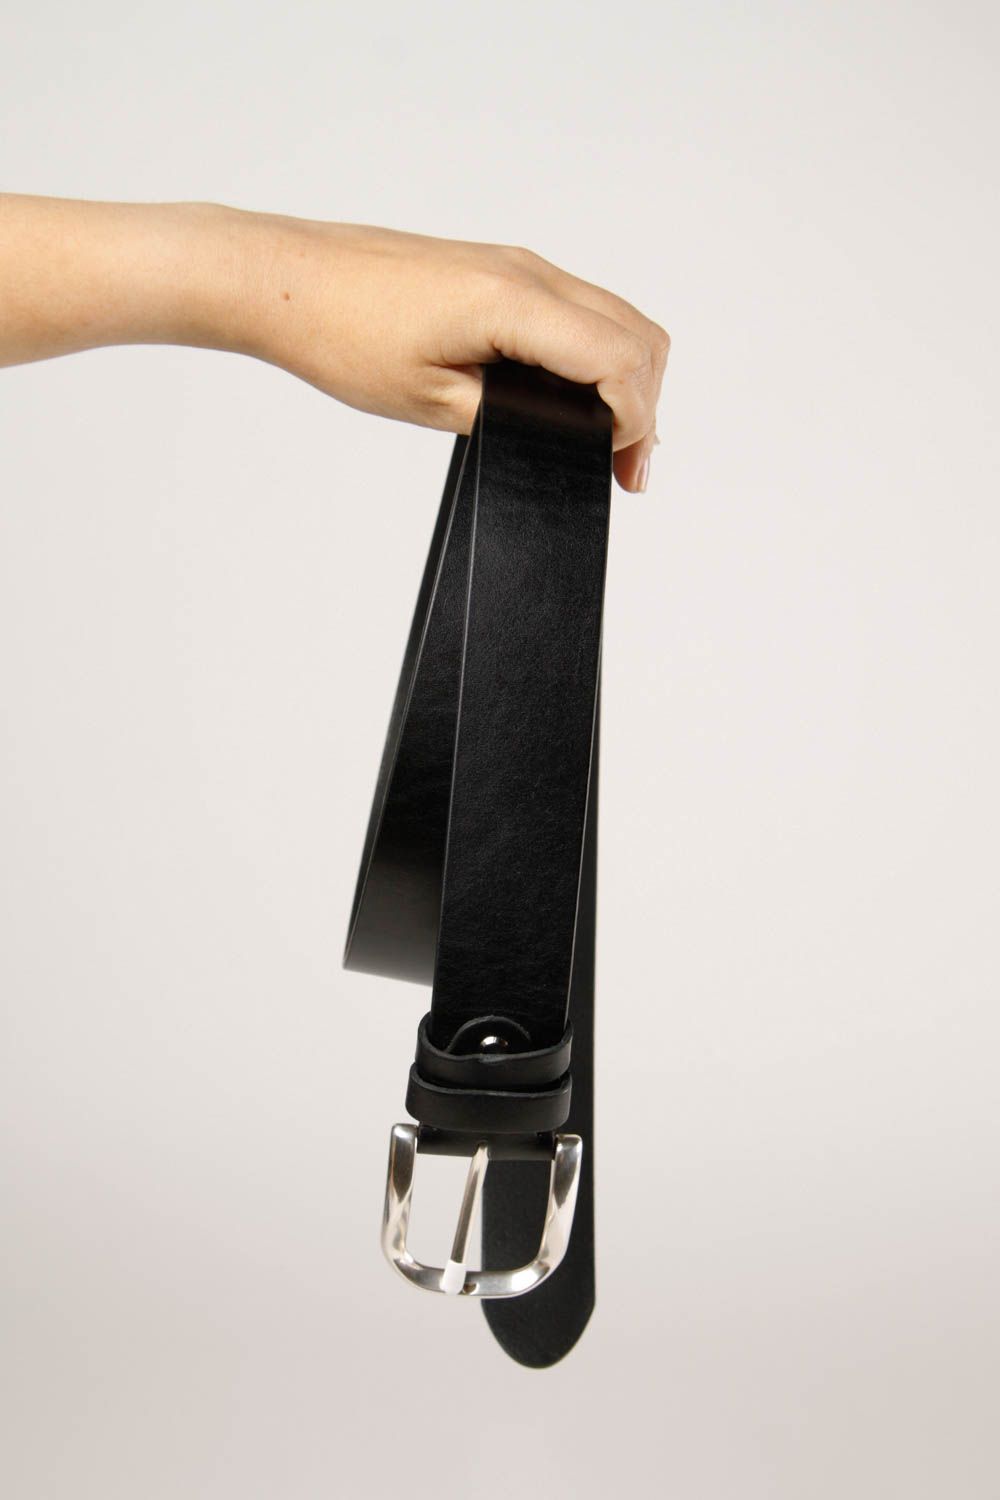 Cinturón de cuero natural hecho a mano accesorio de moda ropa masculina foto 2